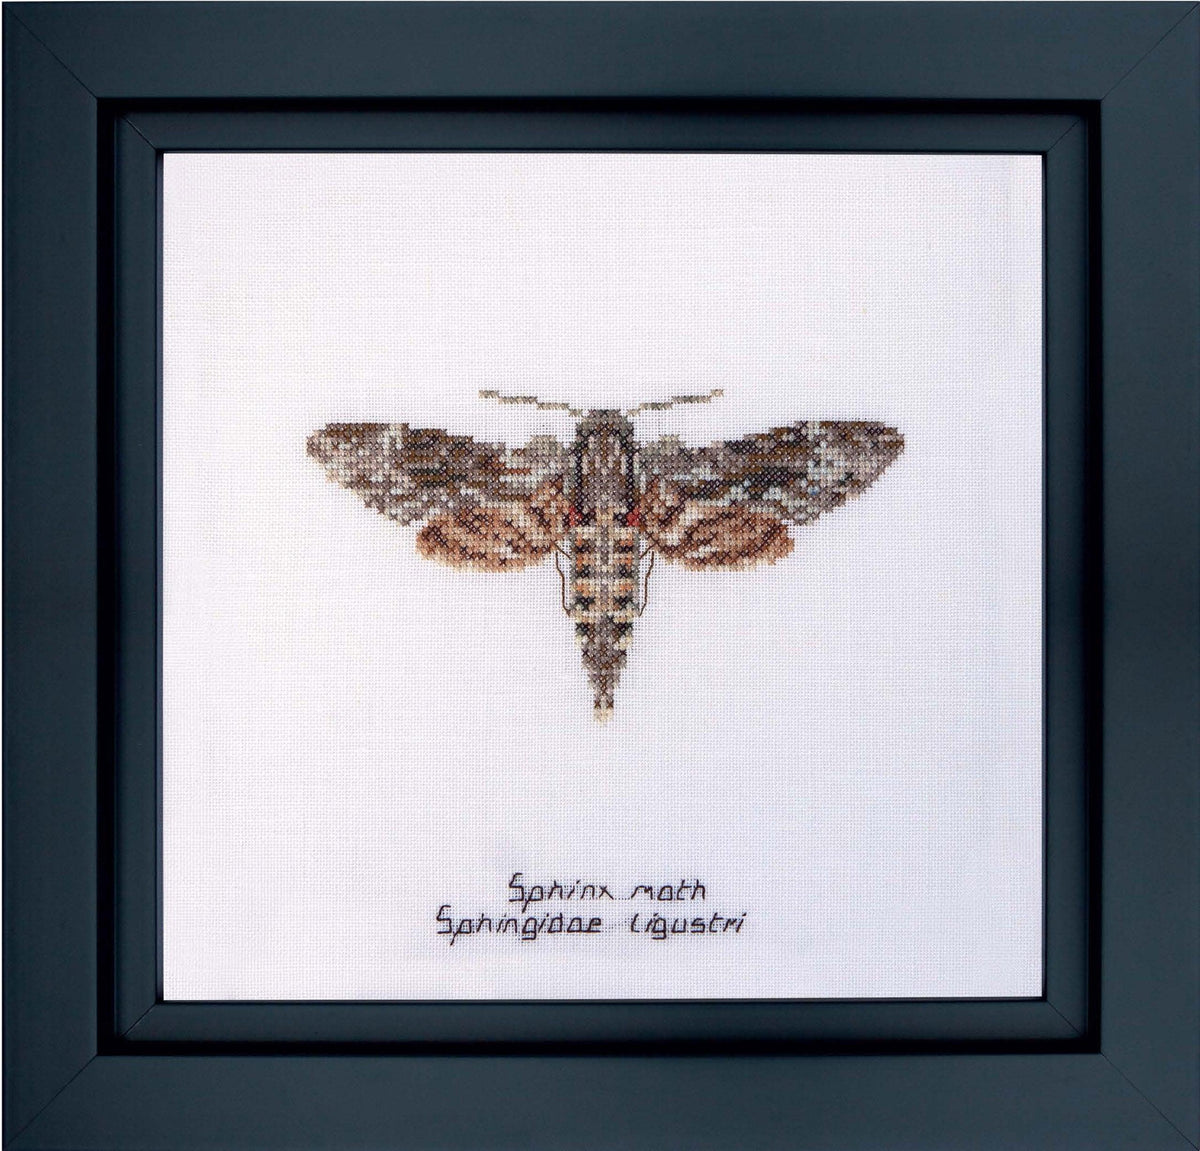 Thea Gouverneur - Counted Cross Stitch Kit - Sphinx moth - Linen - 32 count - 564 - Thea Gouverneur Since 1959